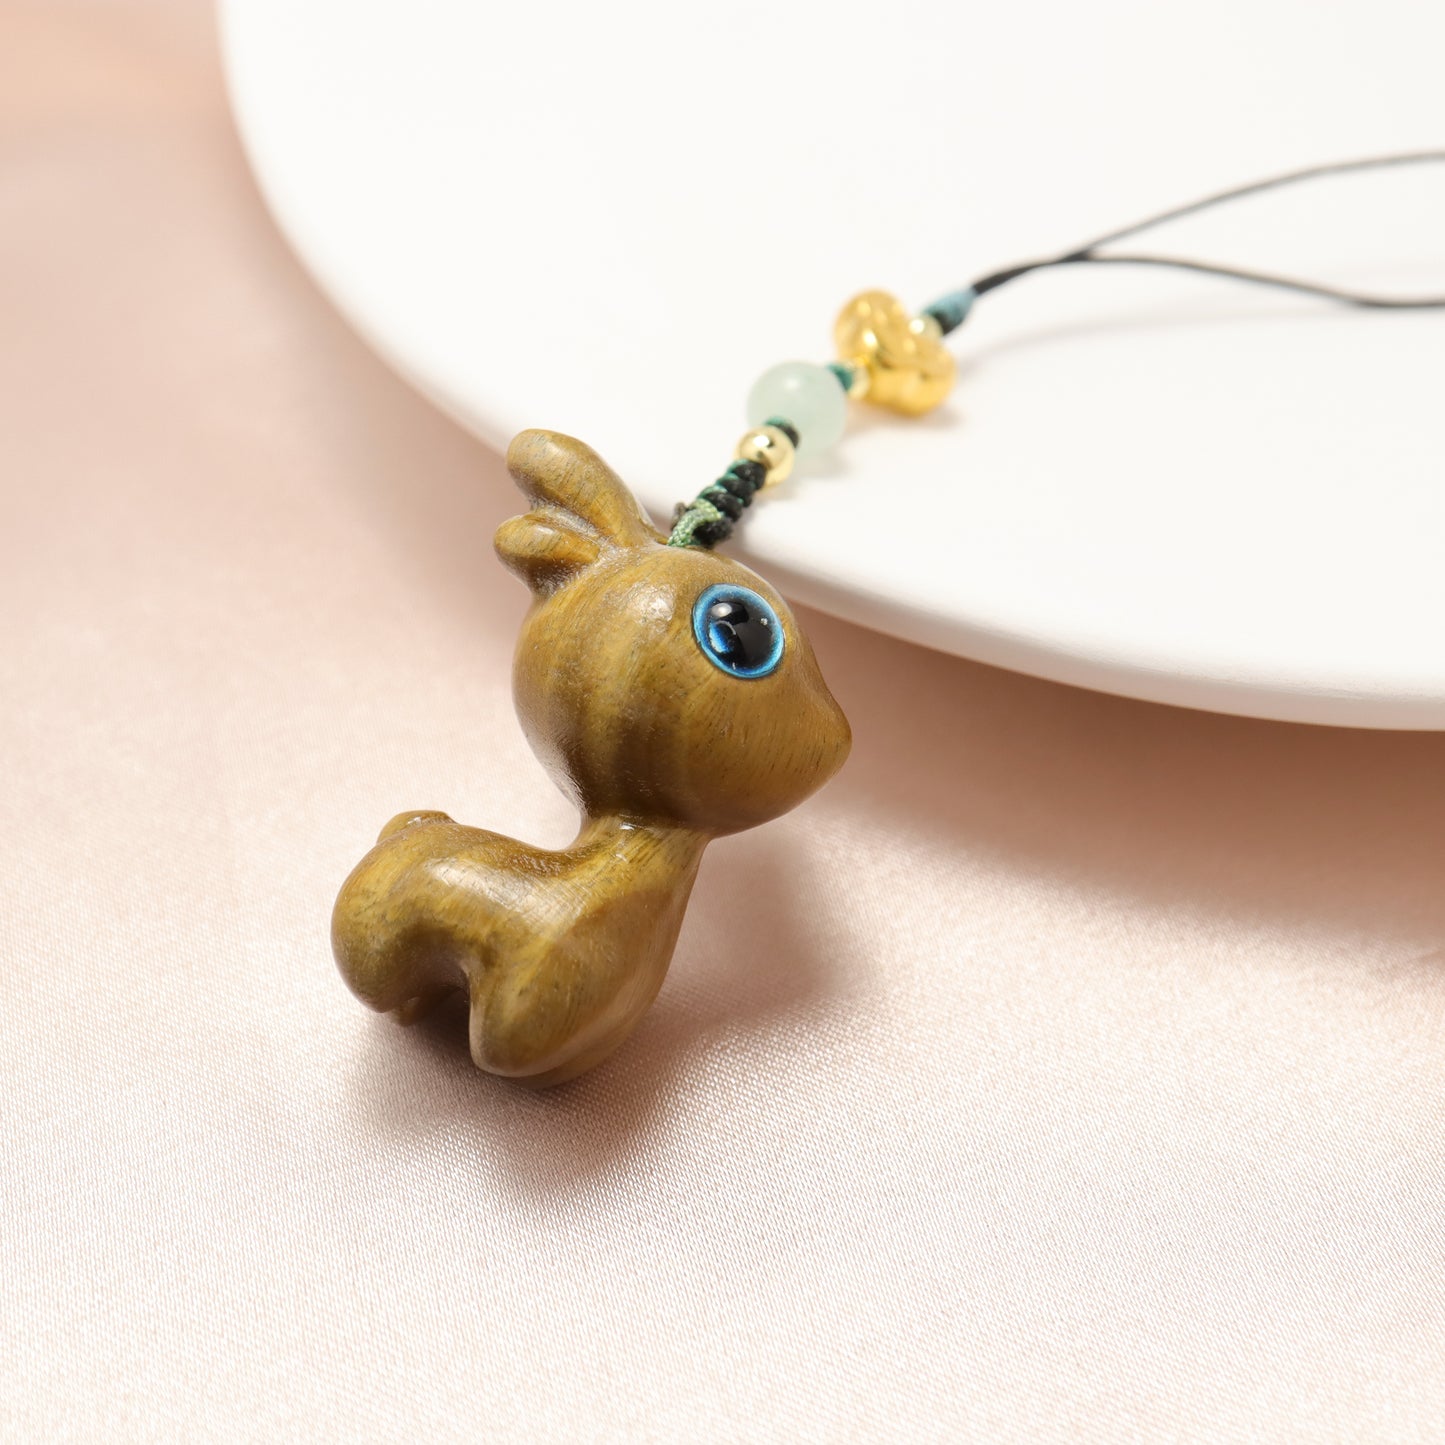 Cutie Deer Green Sandalwood Key Chain Phone Charm